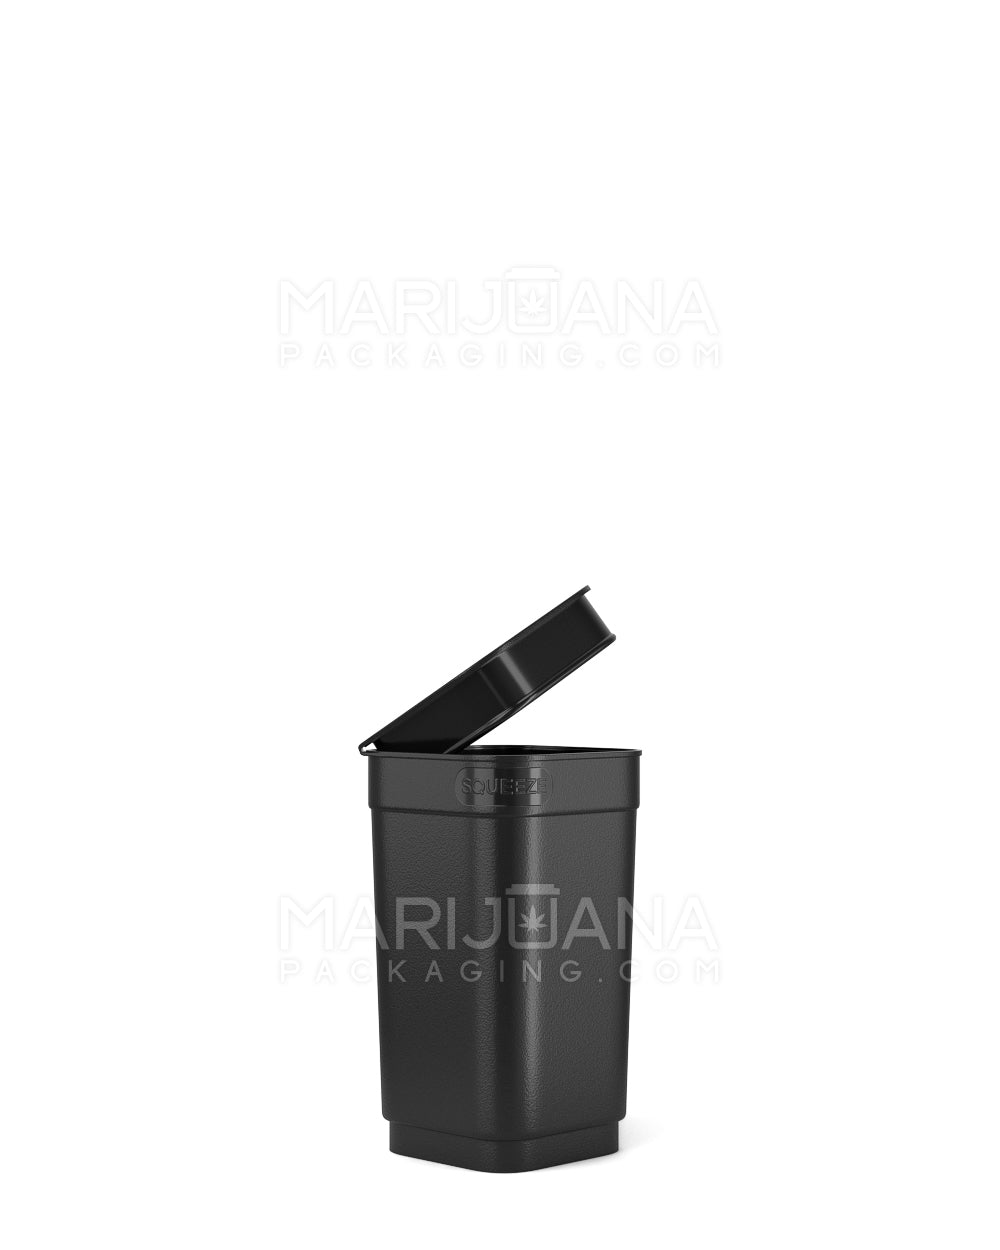 POLLEN GEAR | Child Resistant 100% Recyclable Opaque Black Pop Box Pop Top Bottles | 13dr - 2g - 825 Count